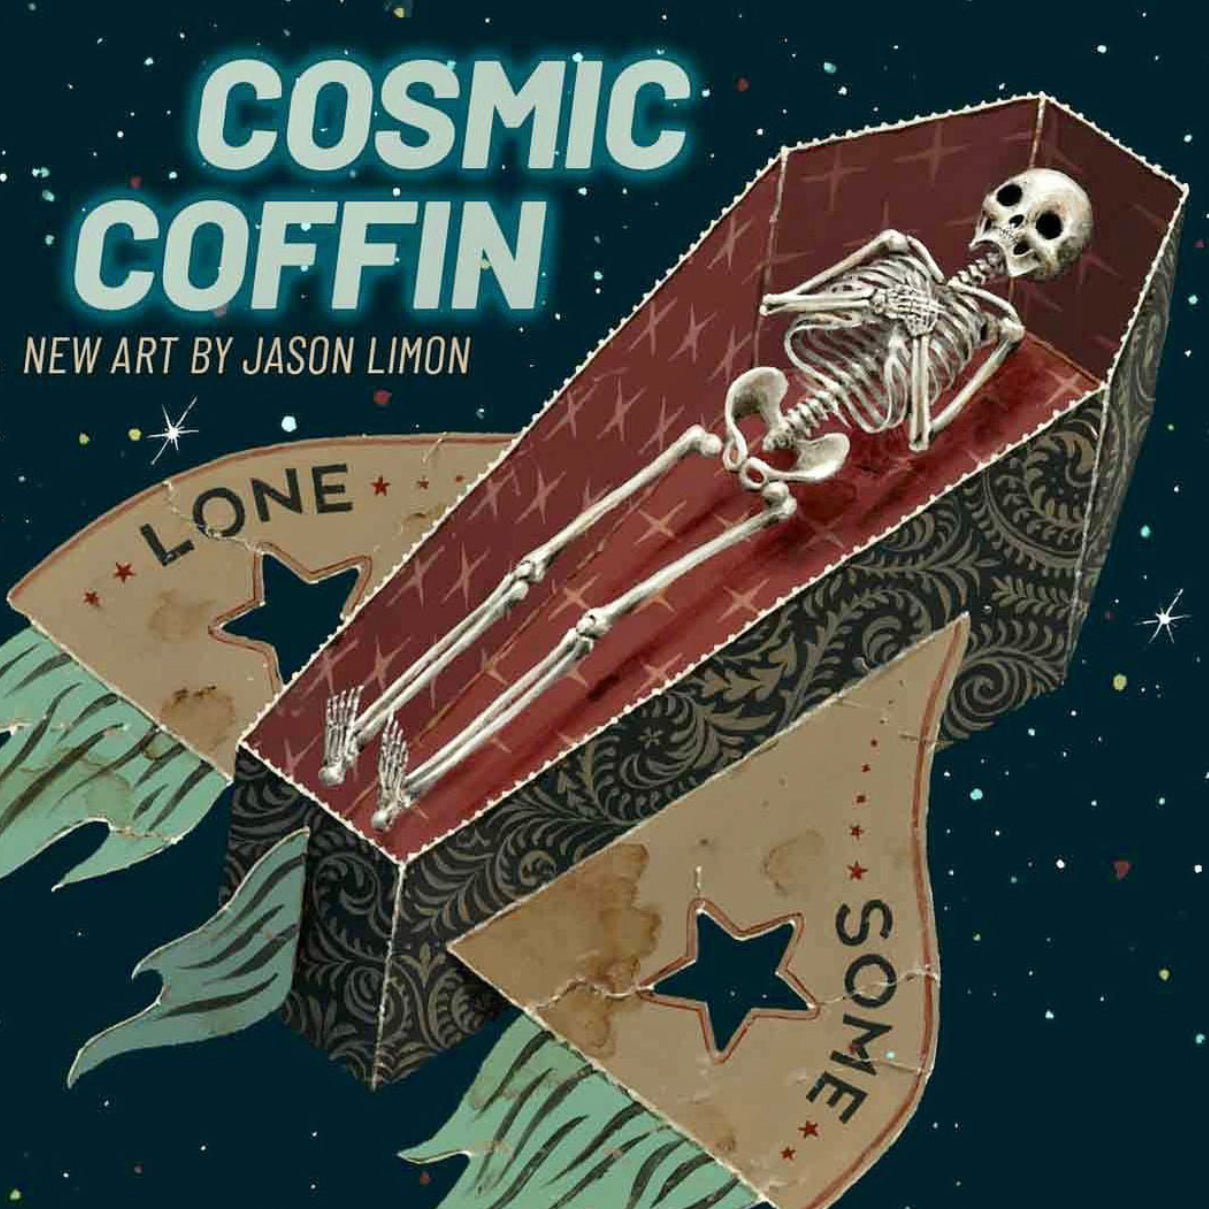 Jason Limon: "Cosmic Coffin" Exhibit at BLK WHT GRY in San Antonio